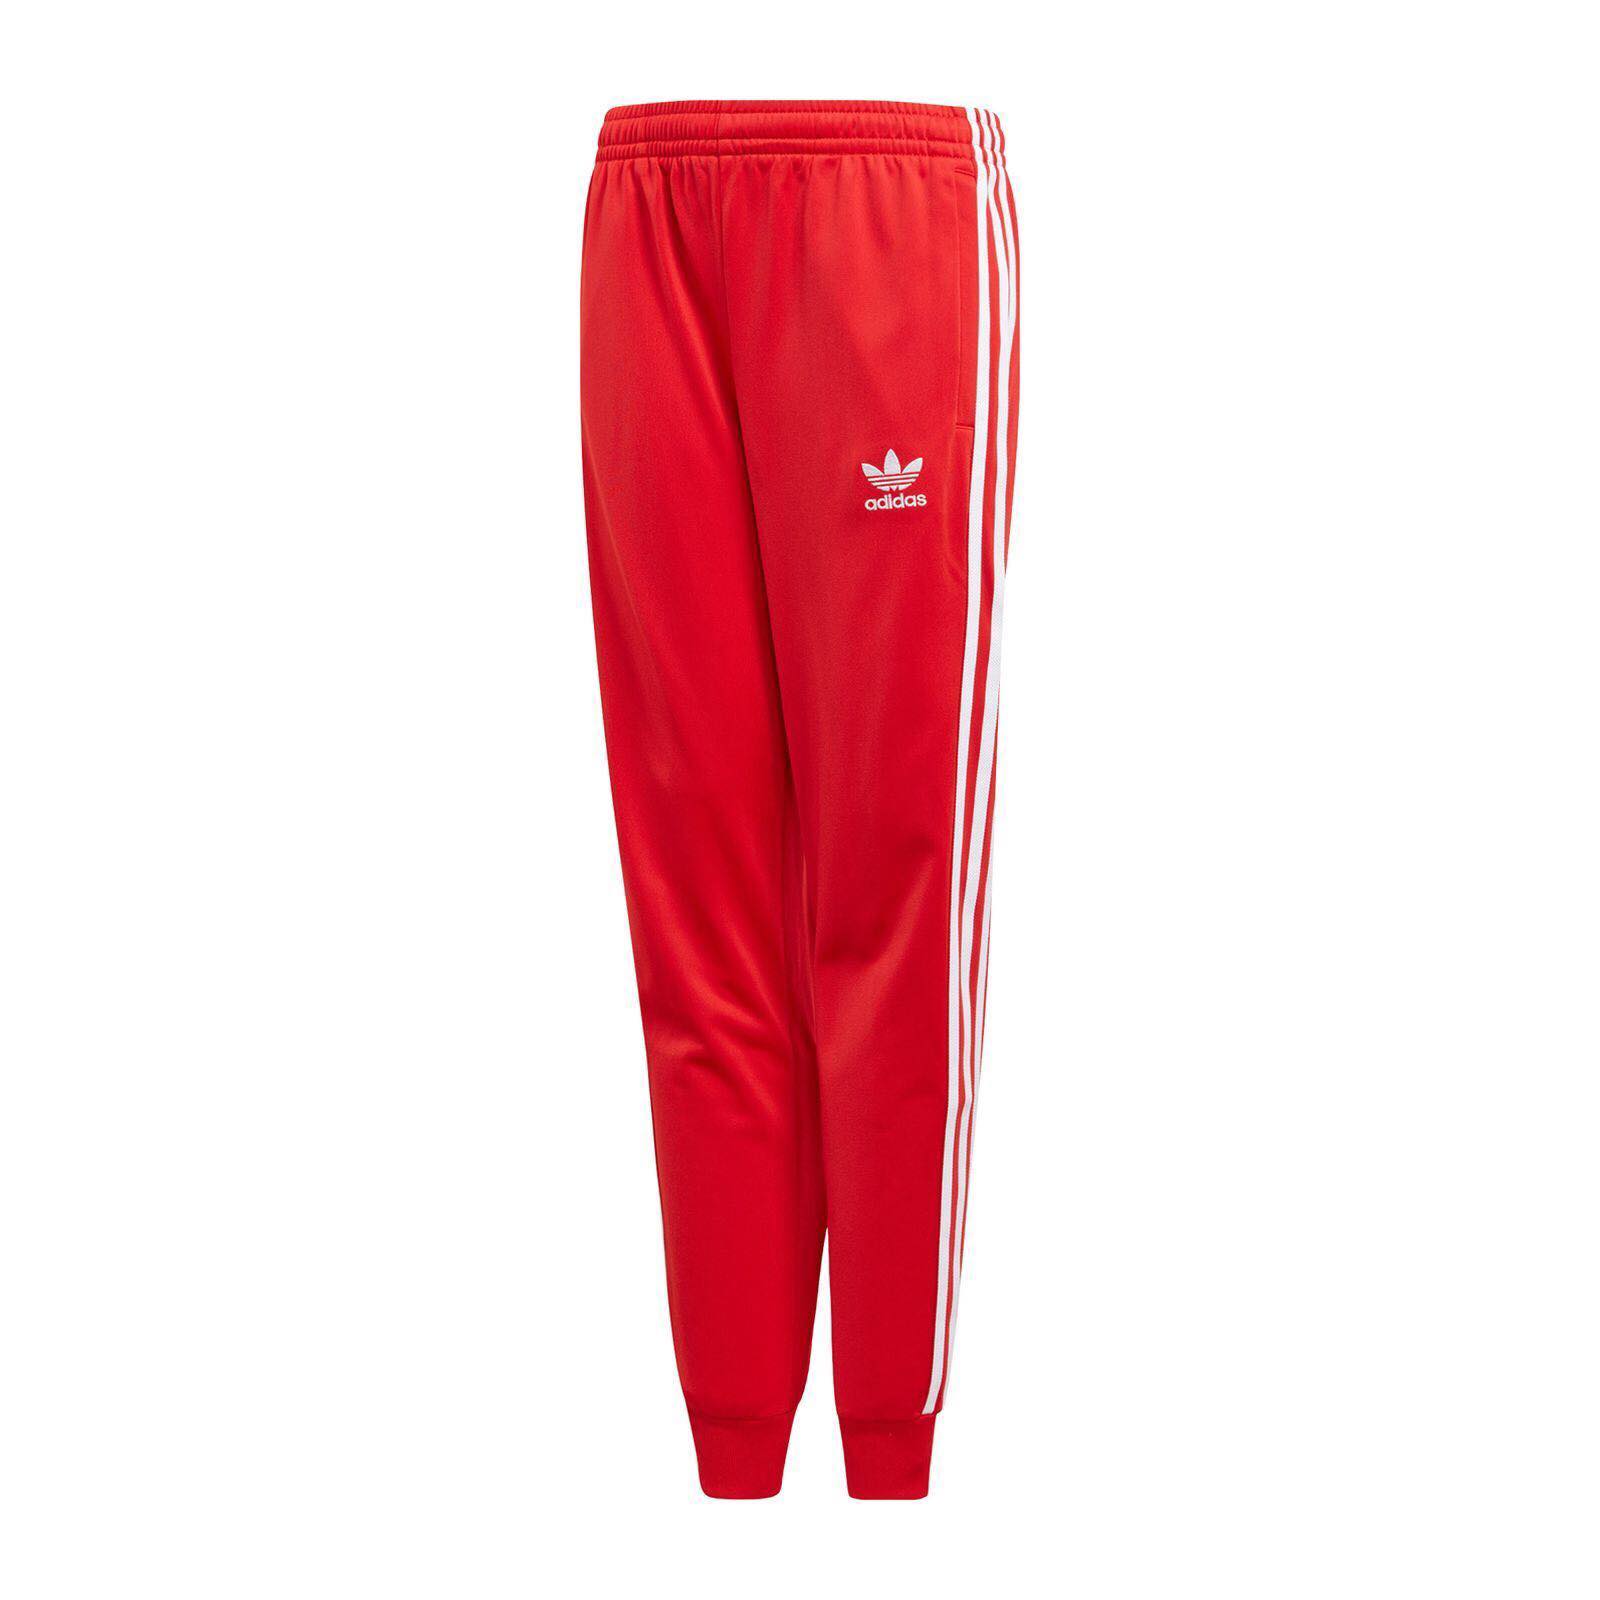 adidas rouge jogging